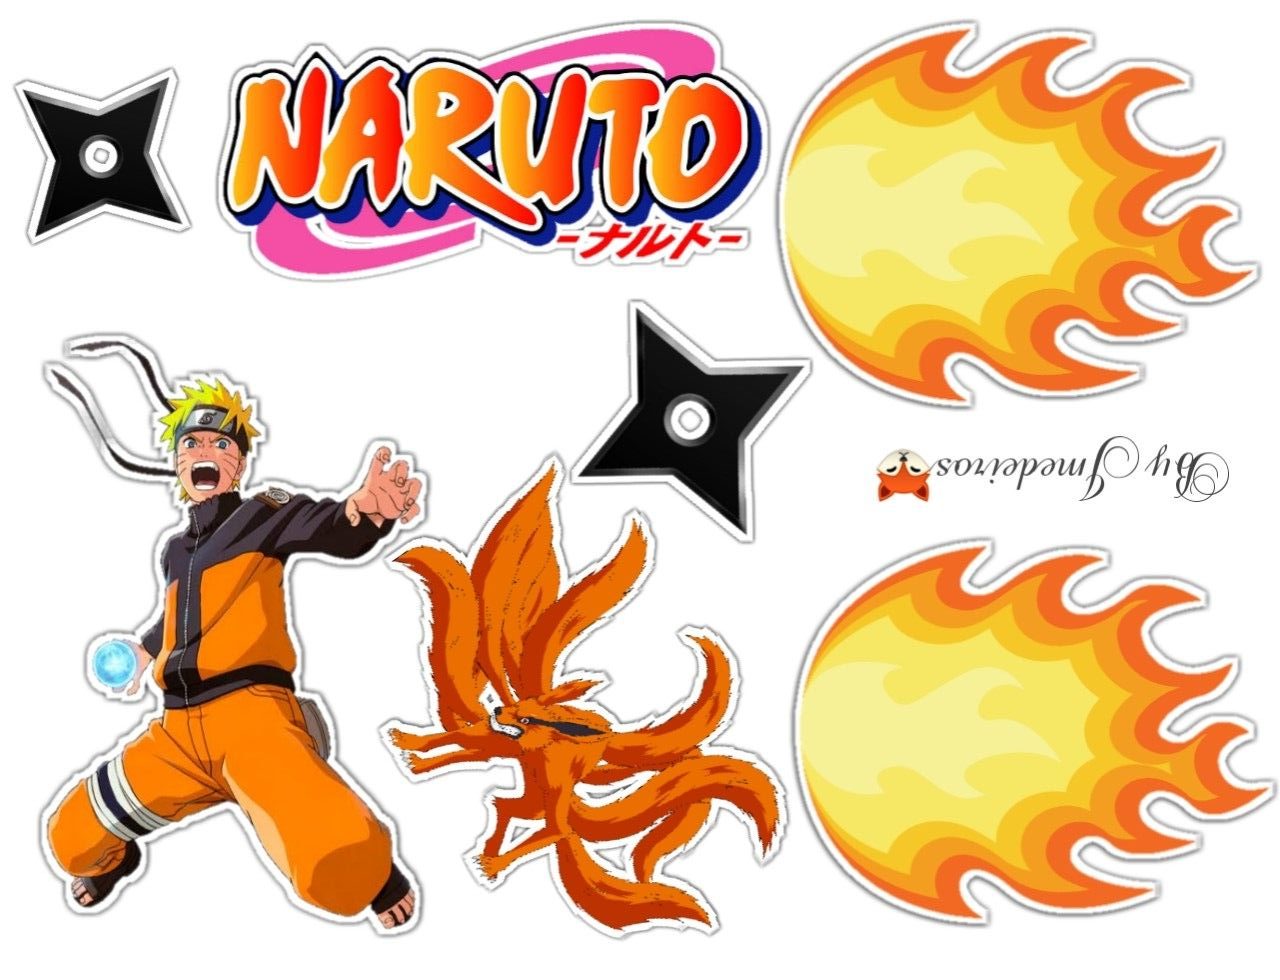 adociee - Bolo Chantininho Personalizado Tema Naruto